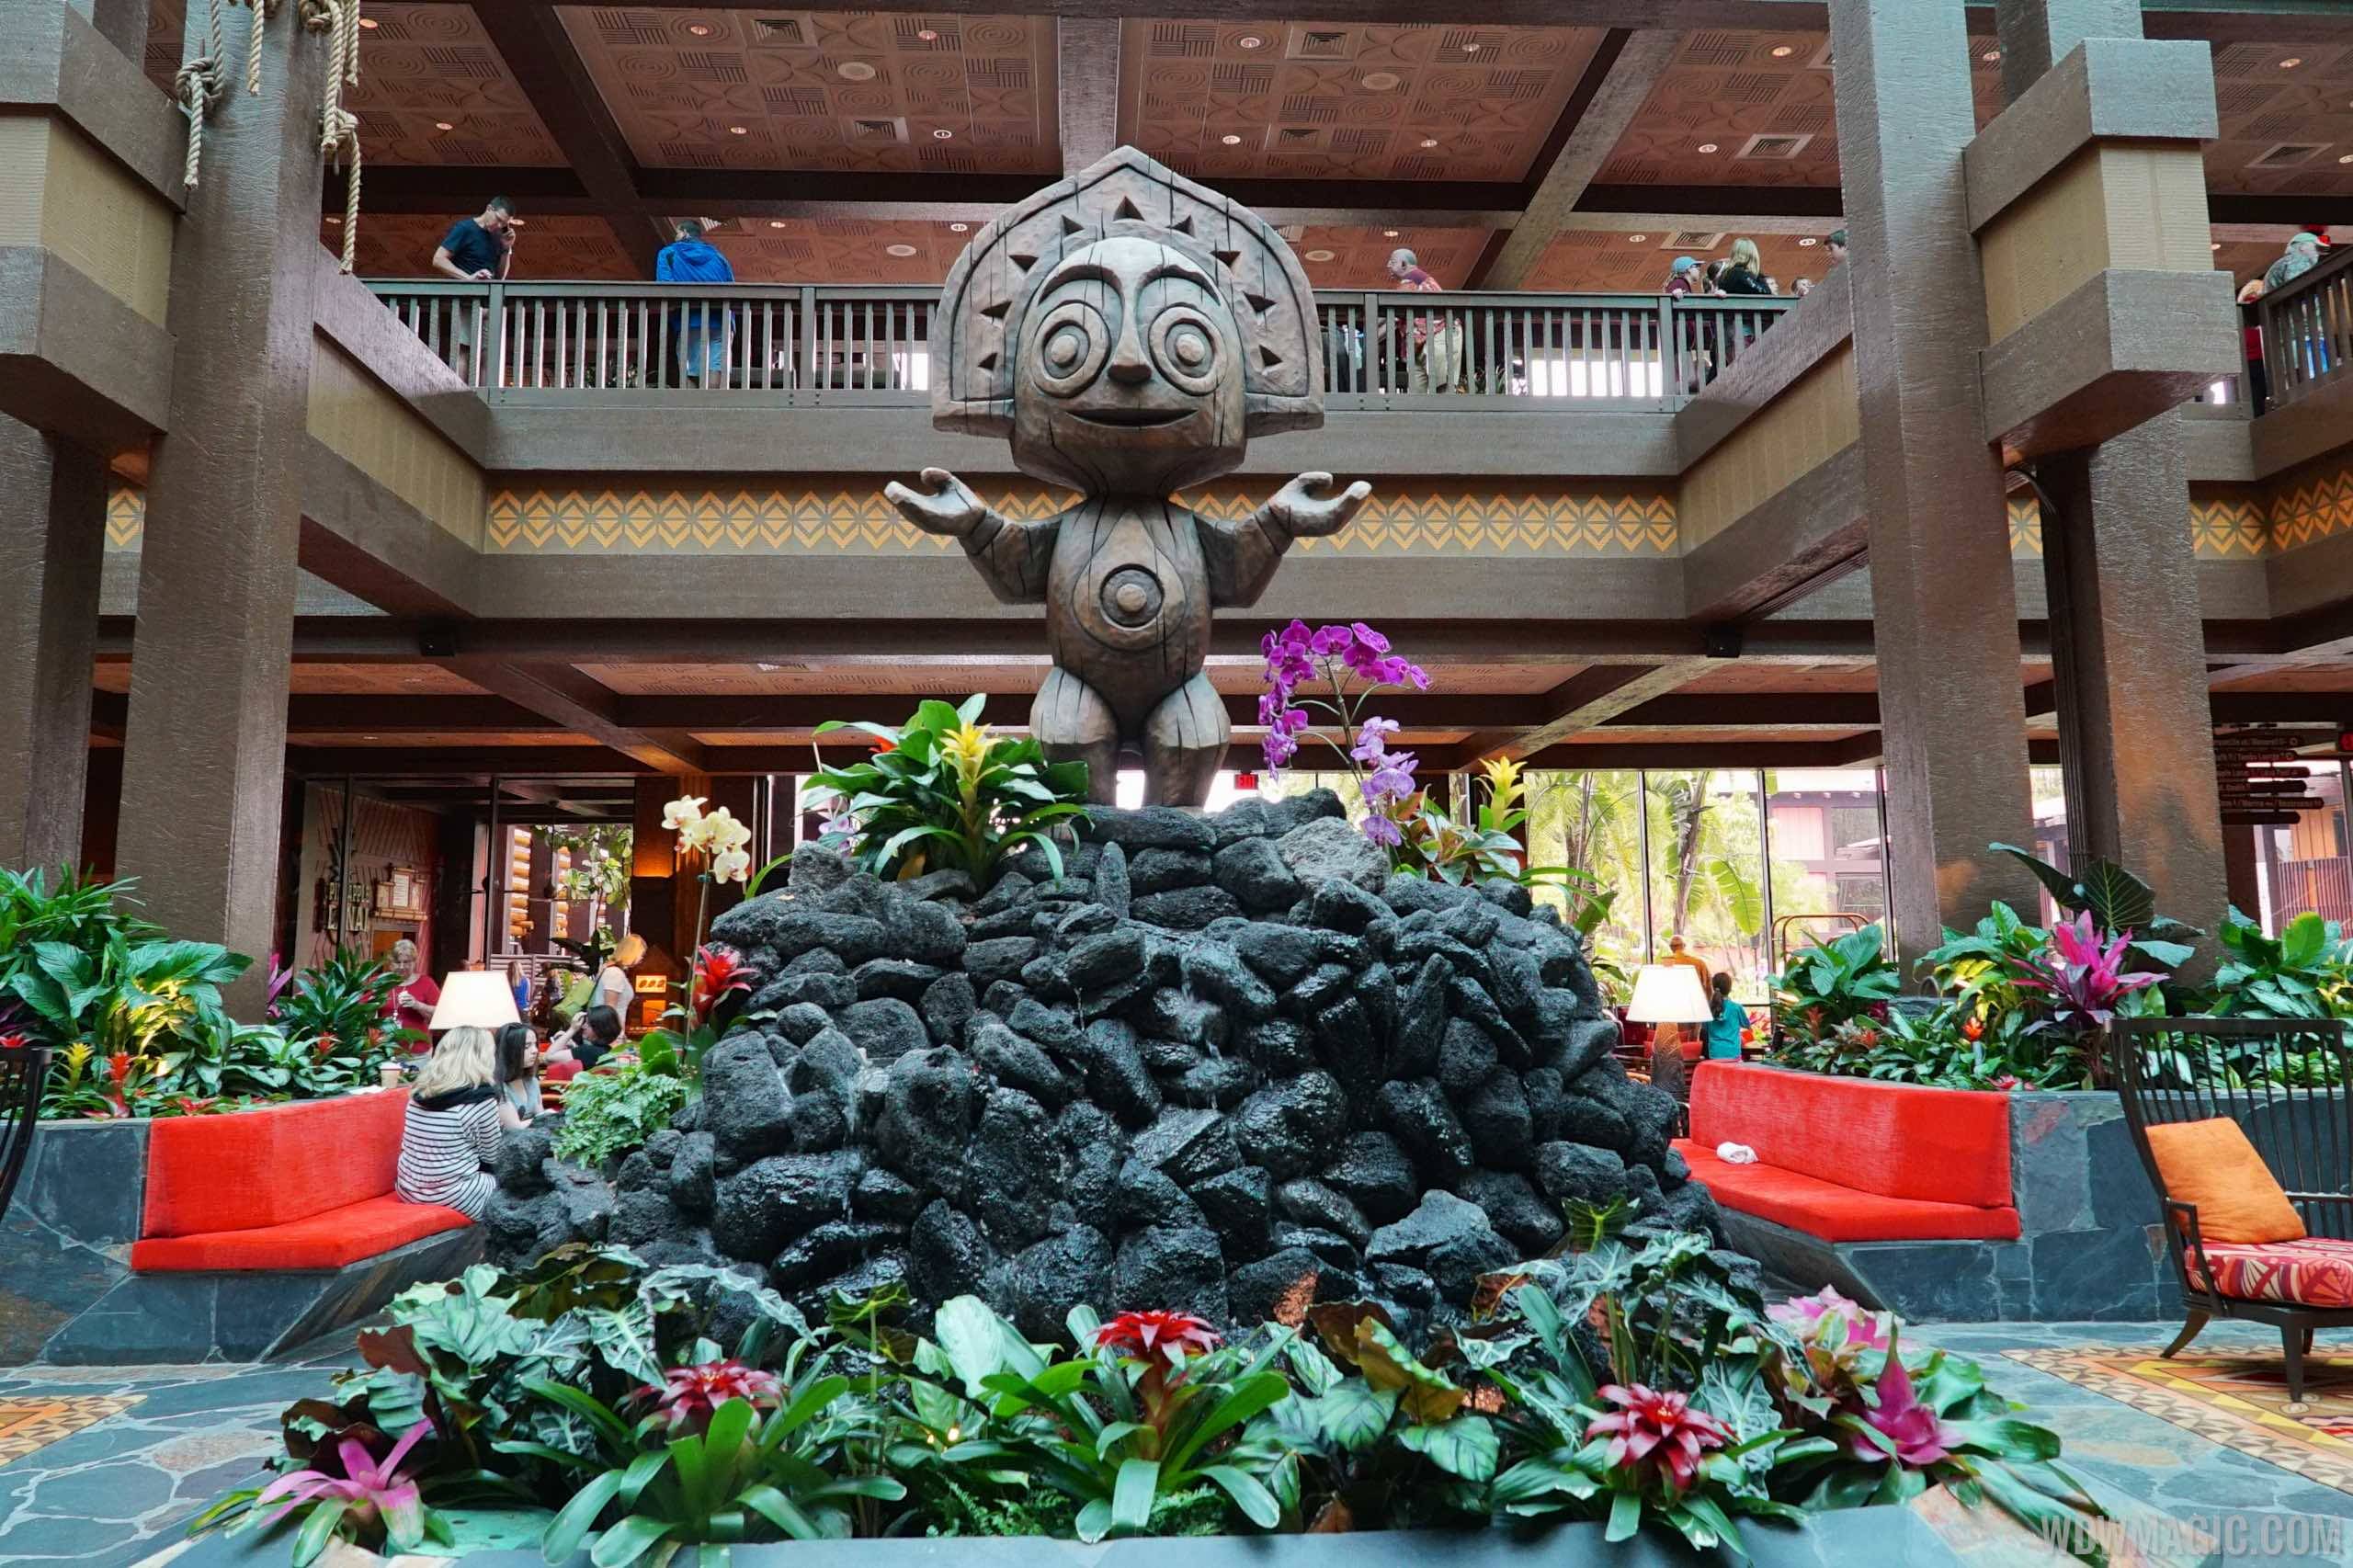 Tiki statue at Disney's Polynesian Village Resort